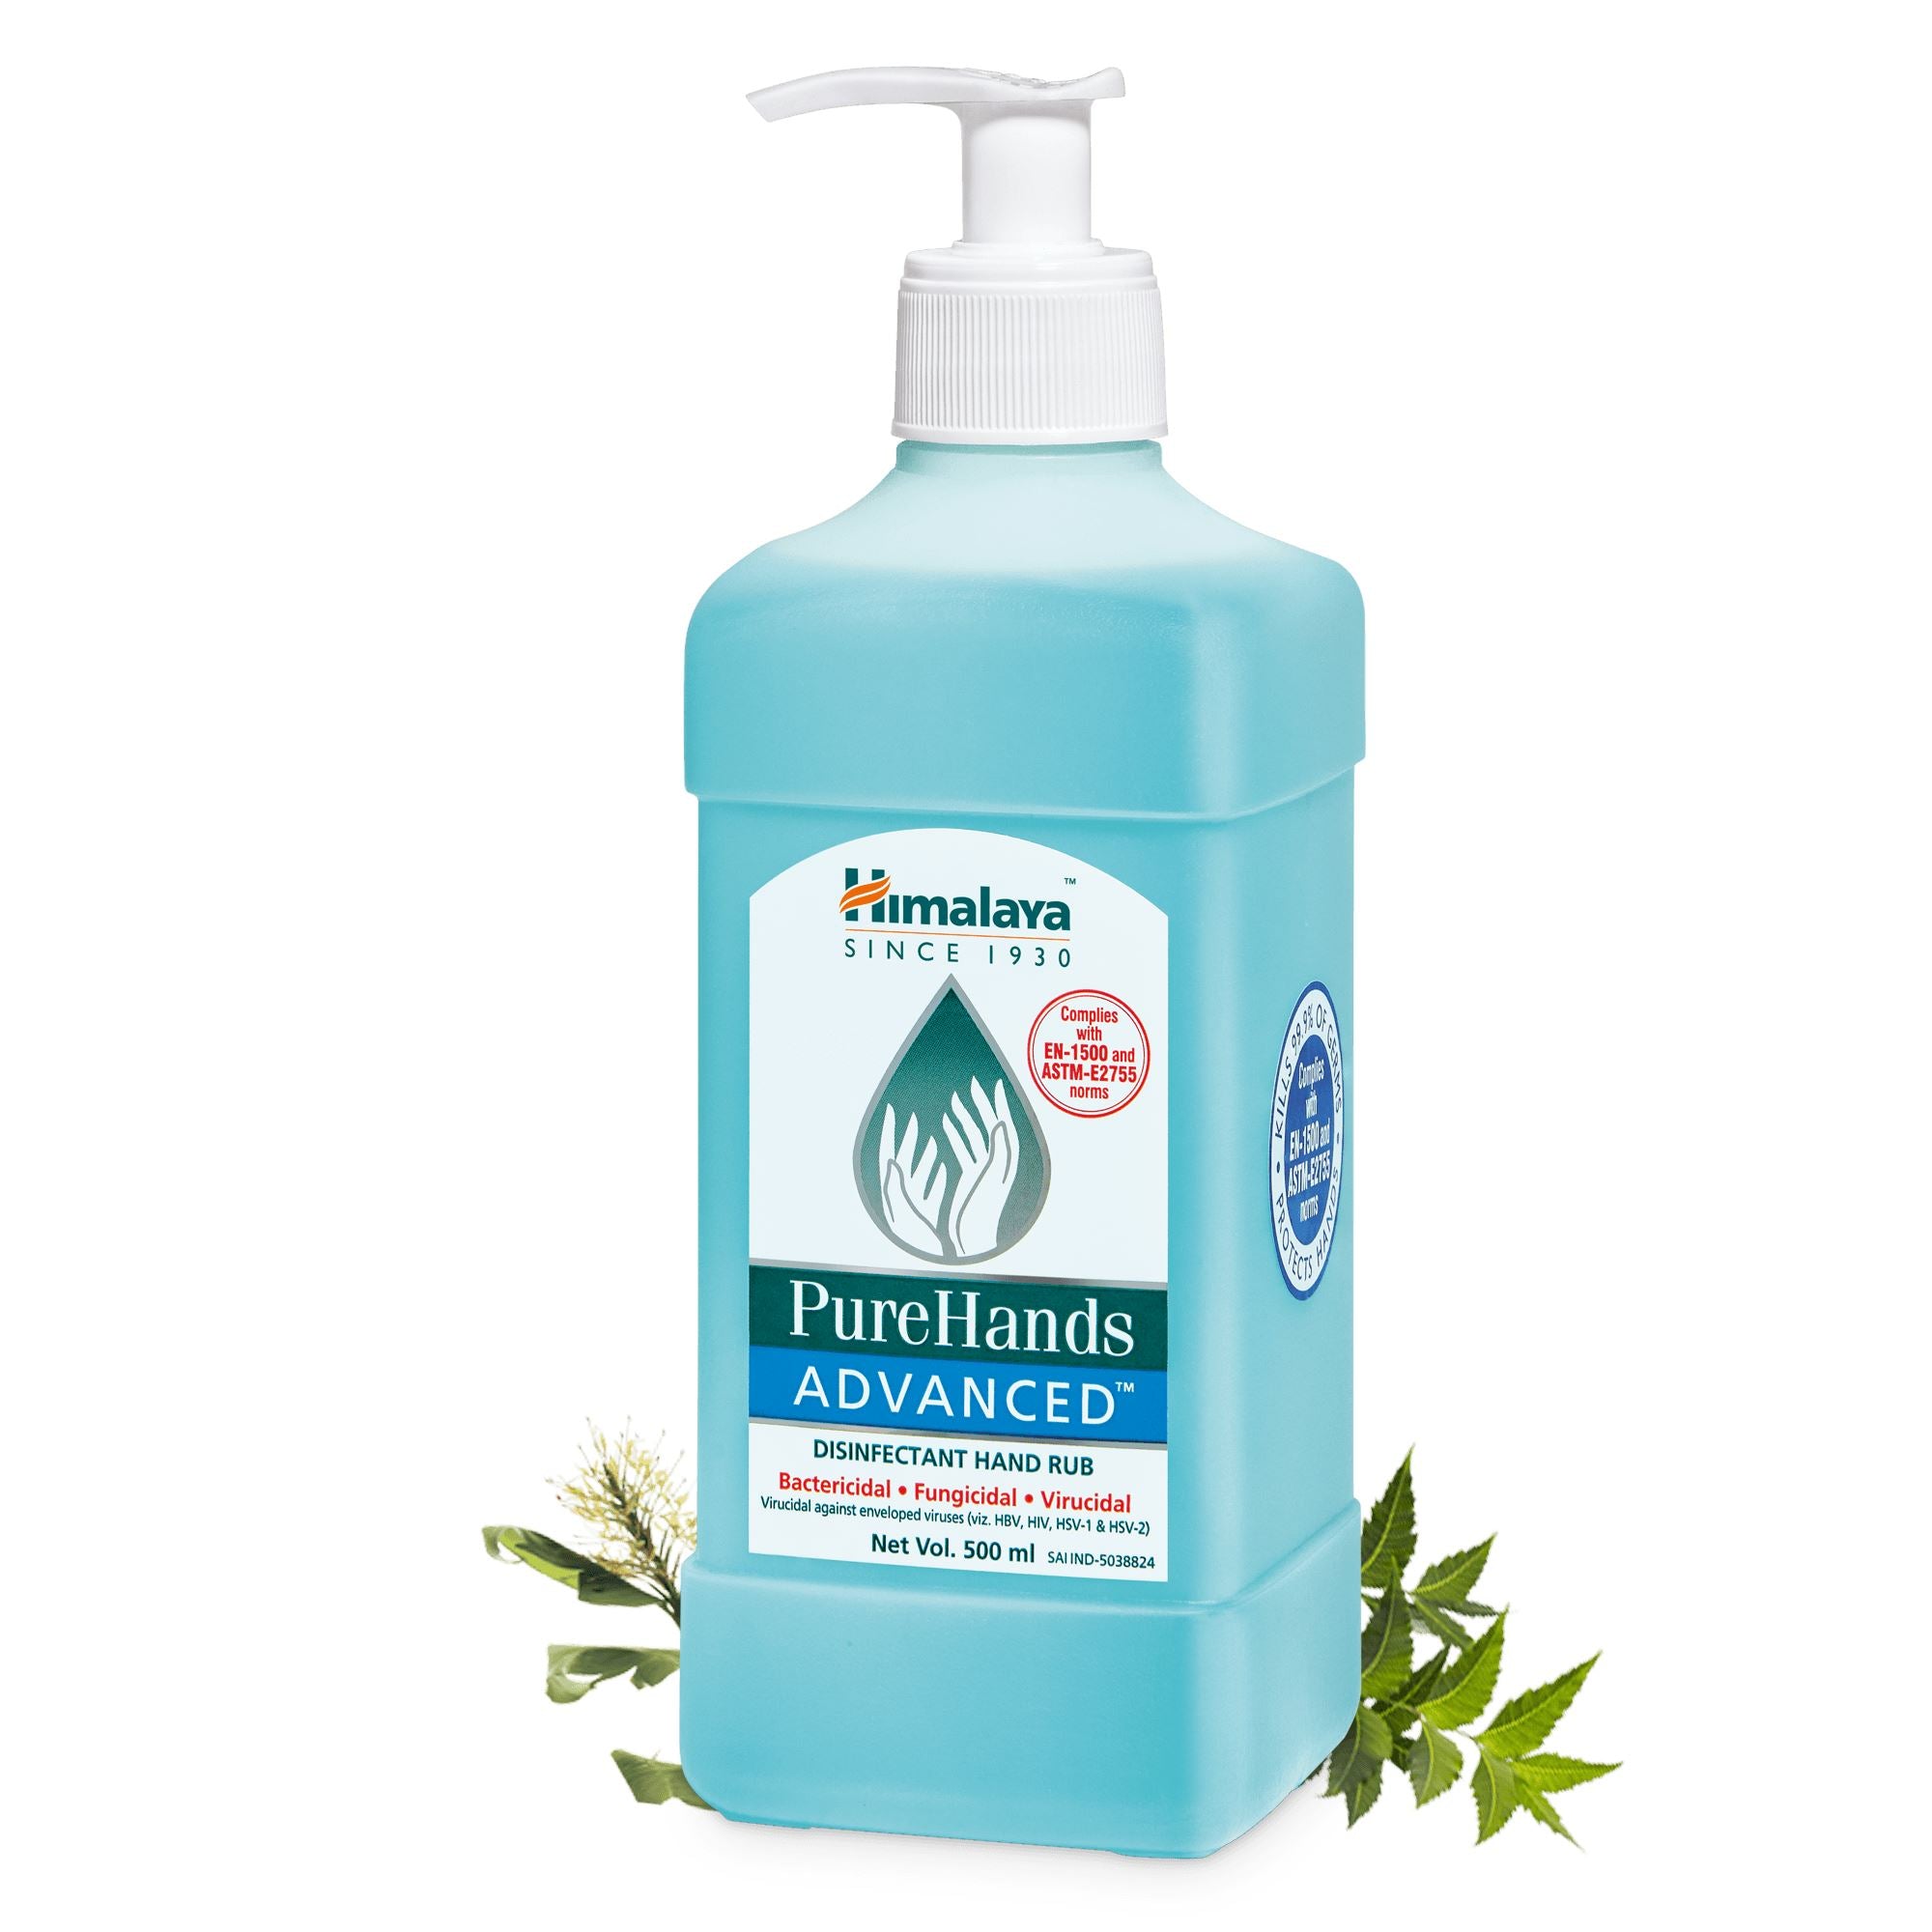 Himalaya PureHands Advanced - Disinfectant handrub